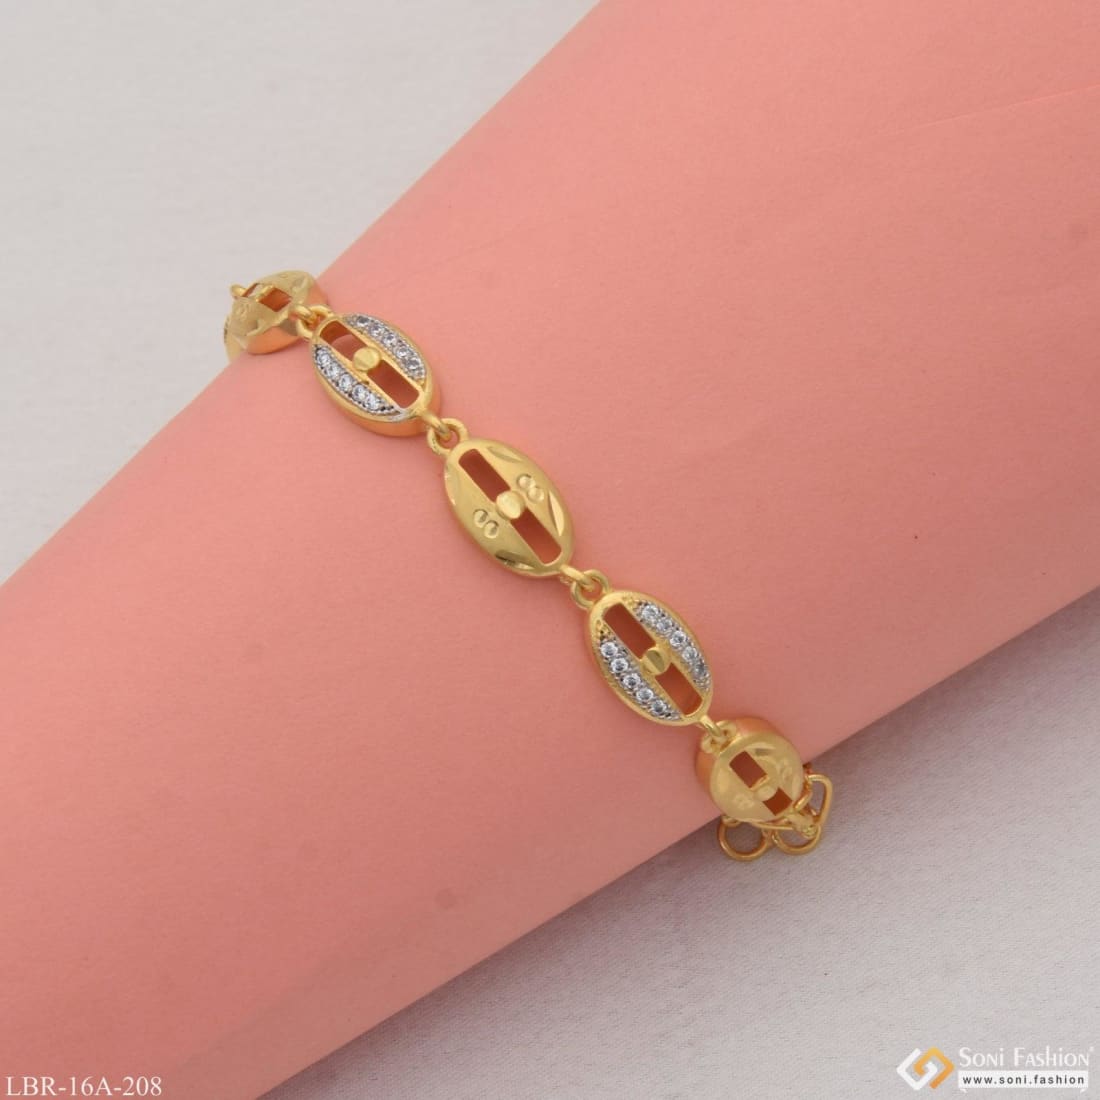 New Sai Baba Devotional Gold Bracelet For Men – JACKMARC.COM